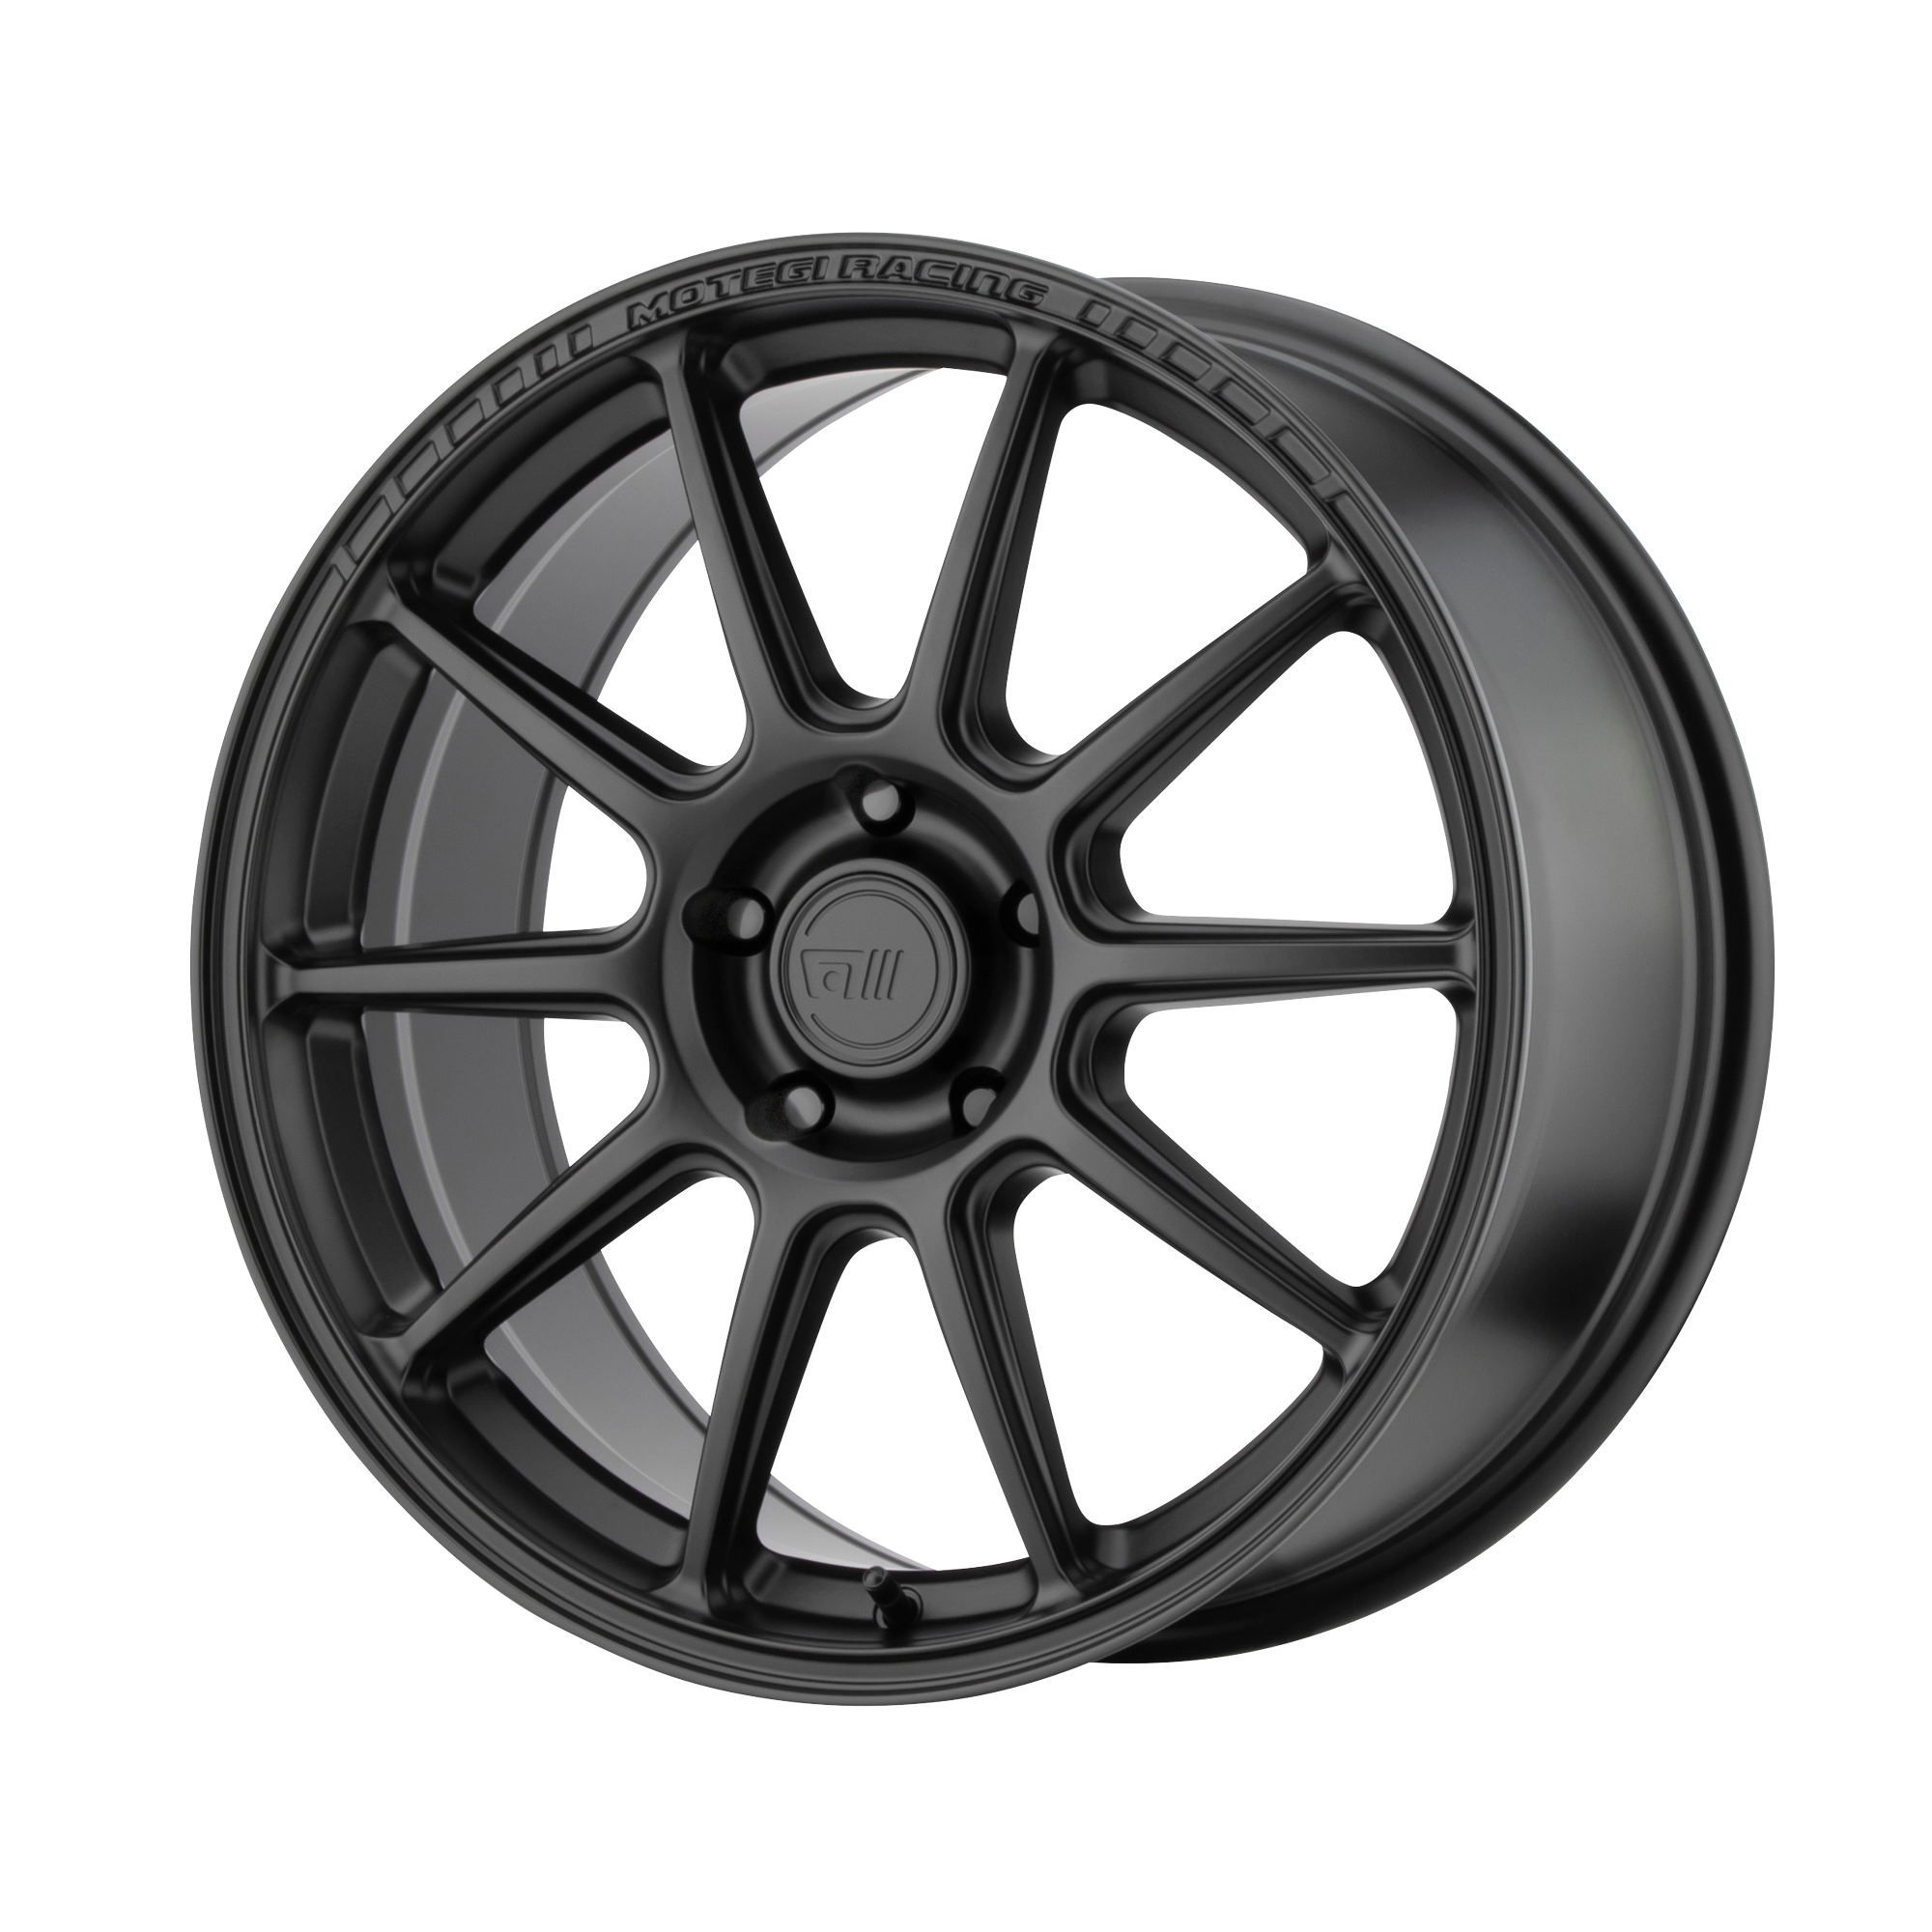 MR140 18x8.5 5x100.00 SATIN BLACK (45 mm) - Tires and Engine Performance